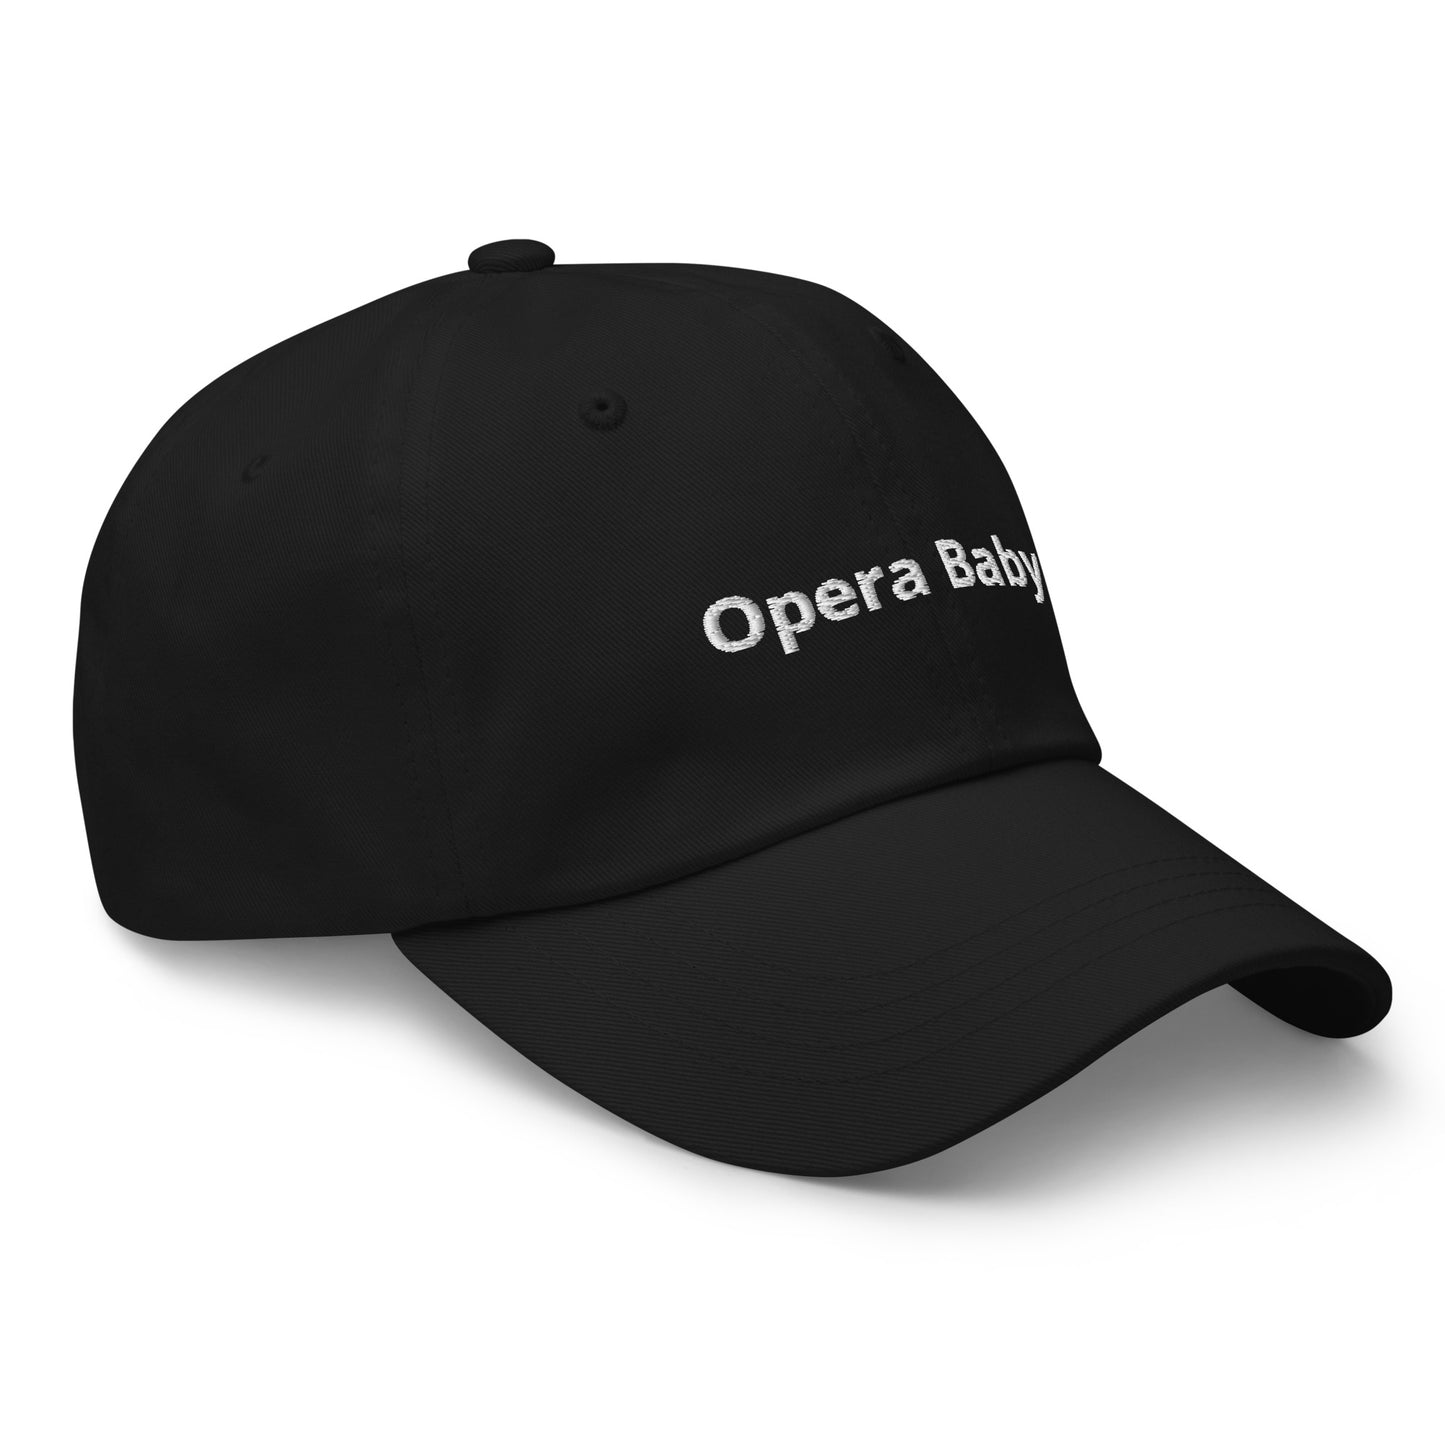 Opera Baby Hat